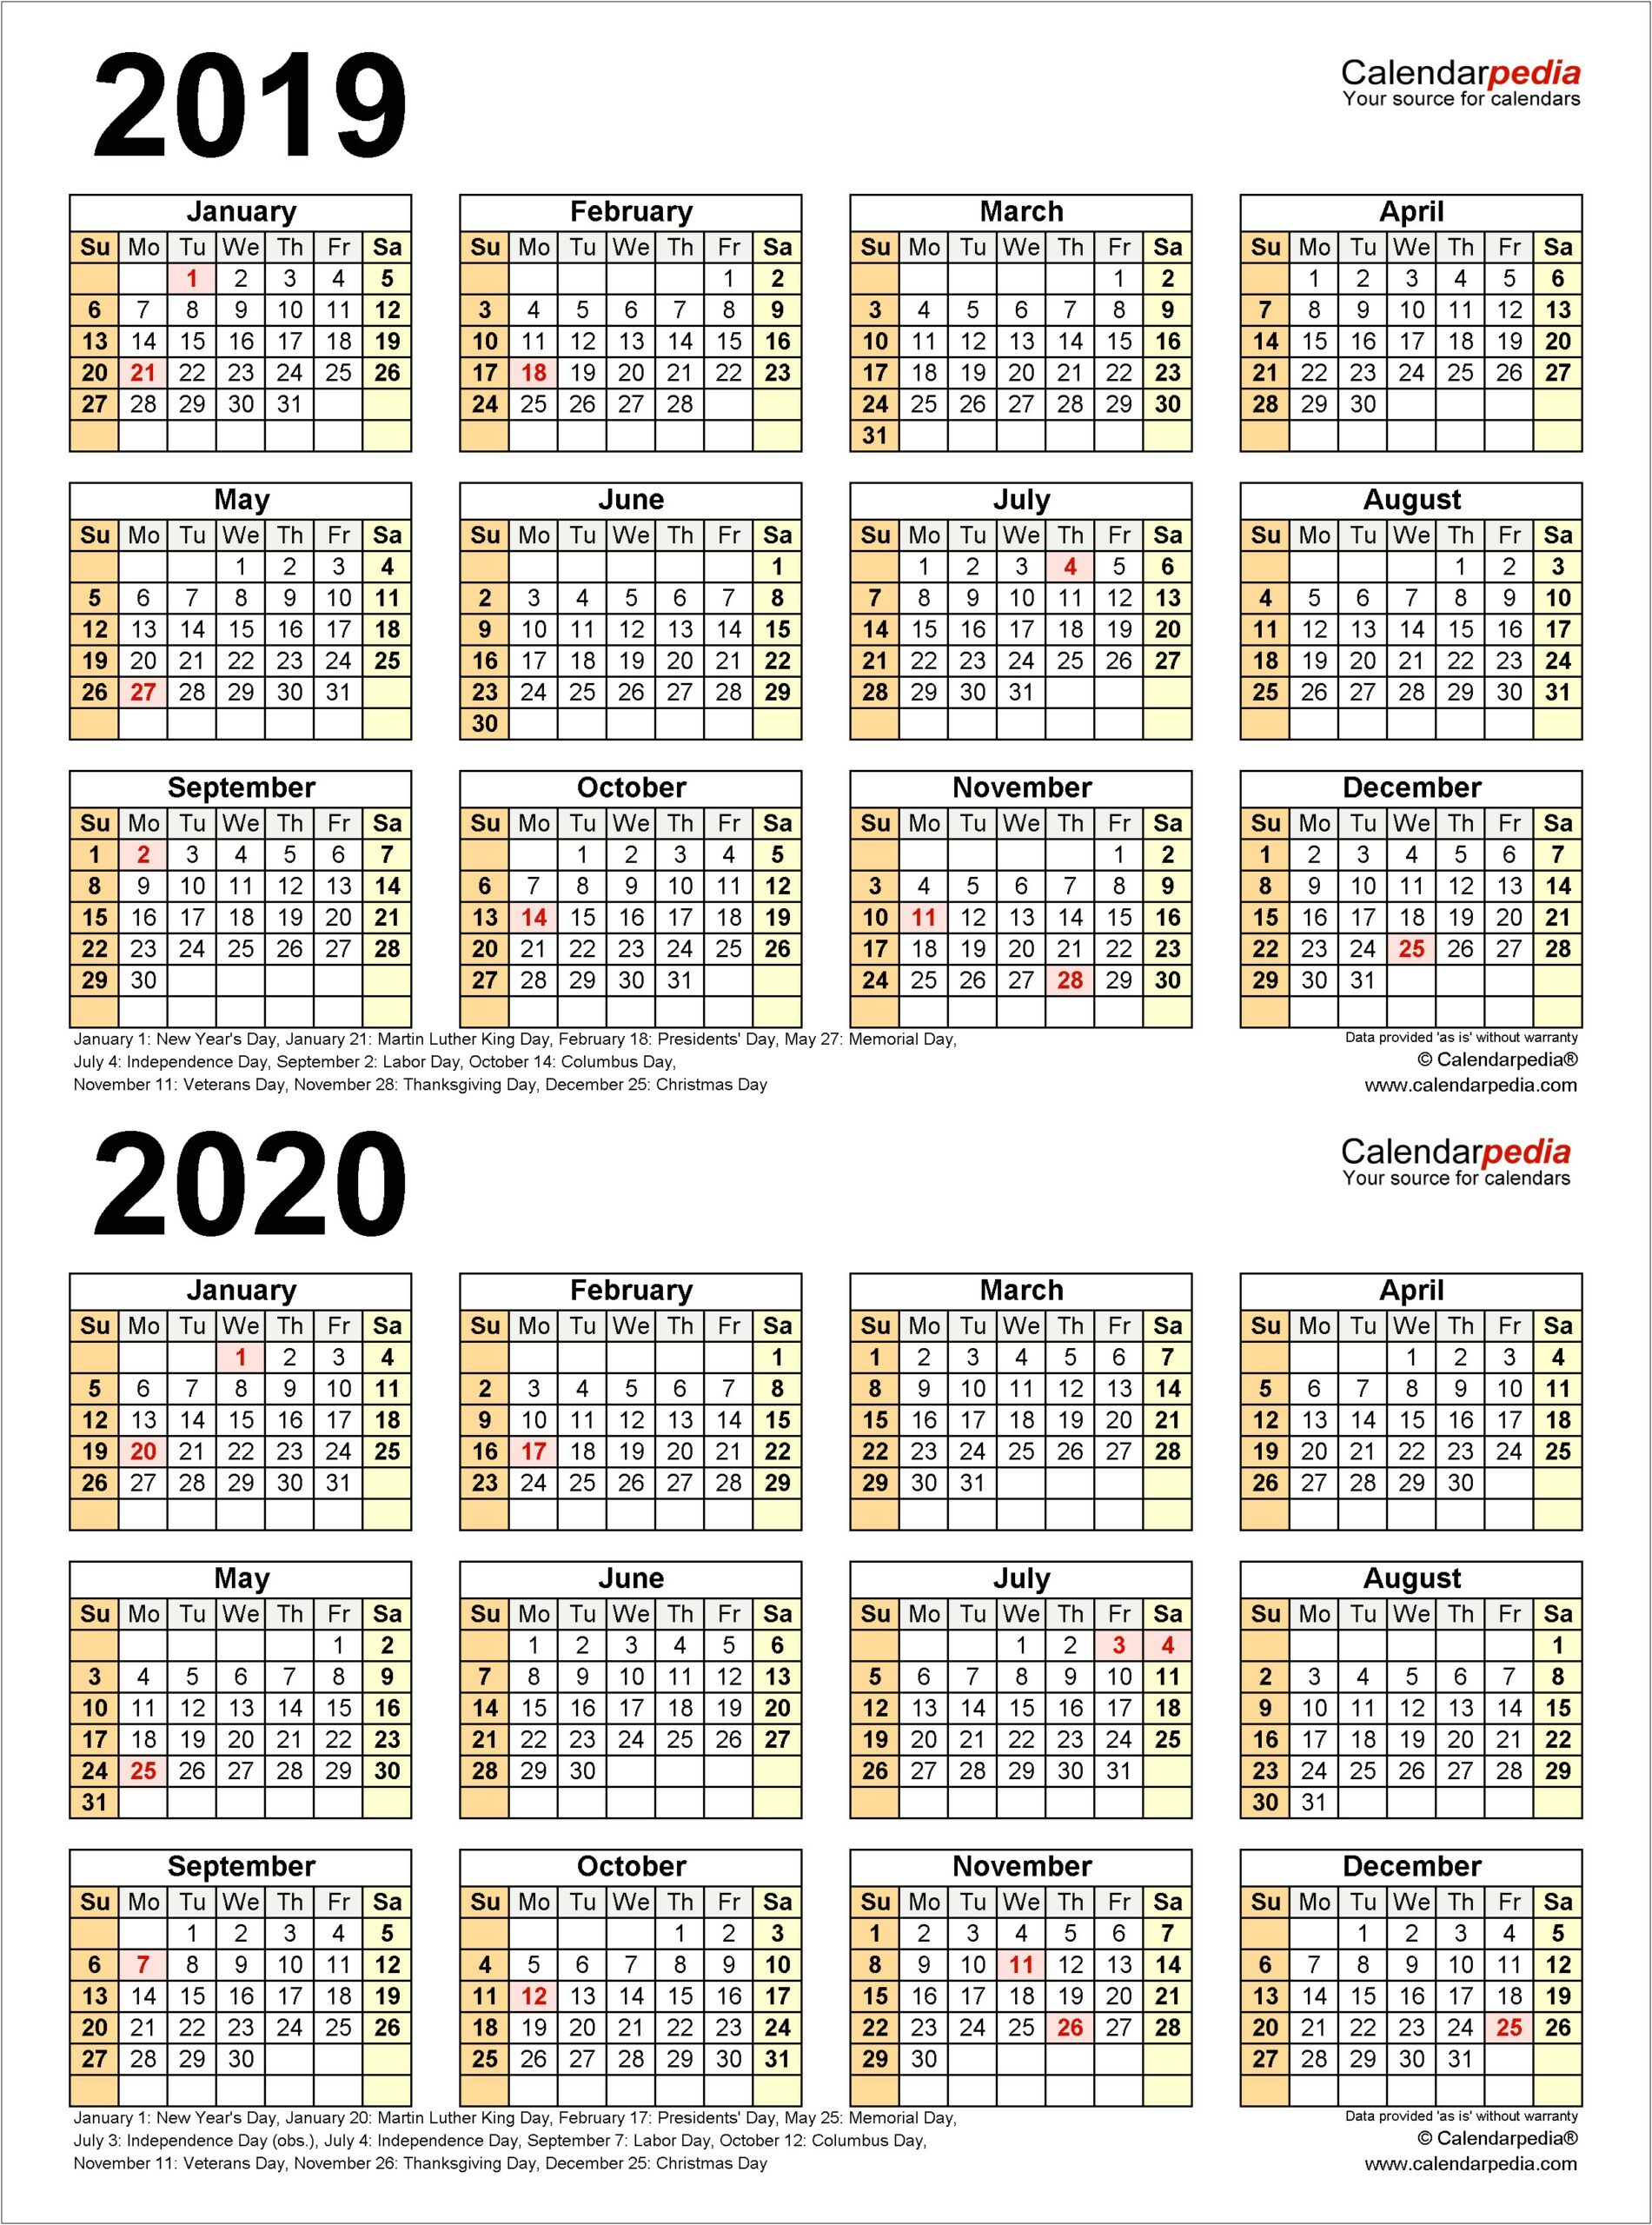 Calendarpedia Weekly Calendar 2019 Word Templates